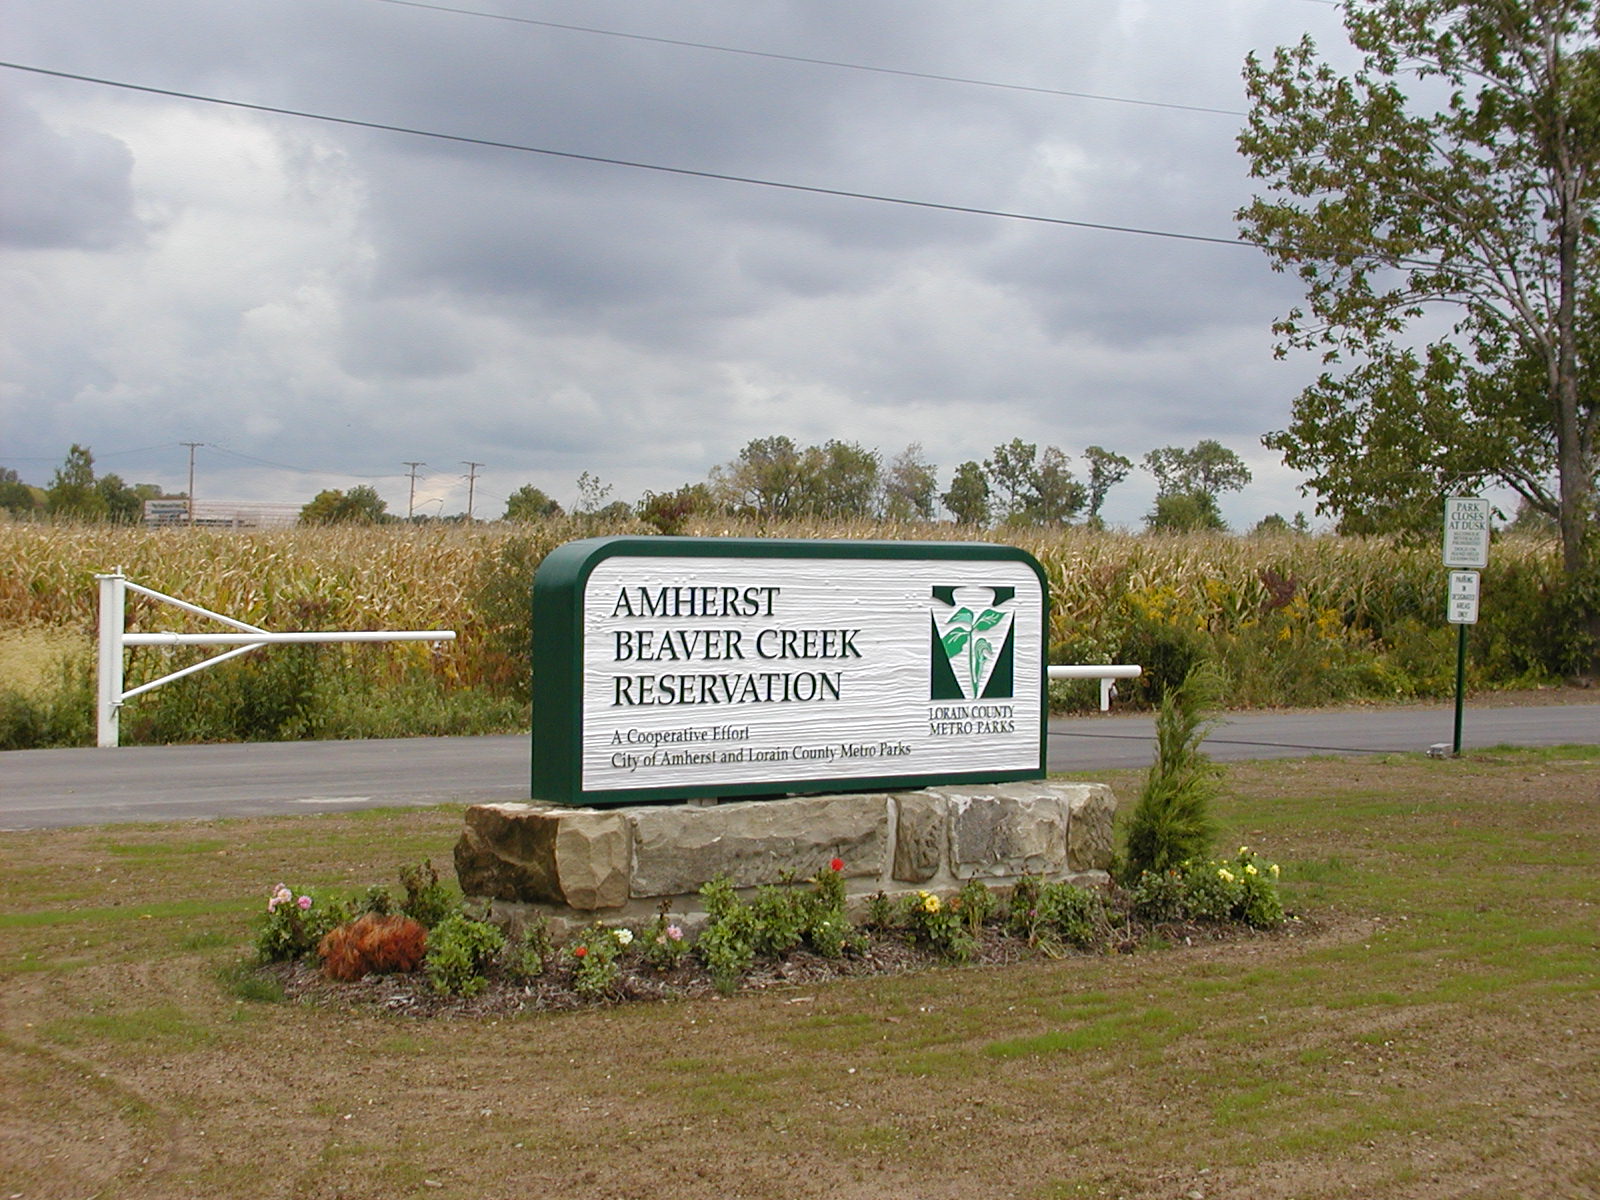 Entrance to Amherst Beaver Creek Reservation